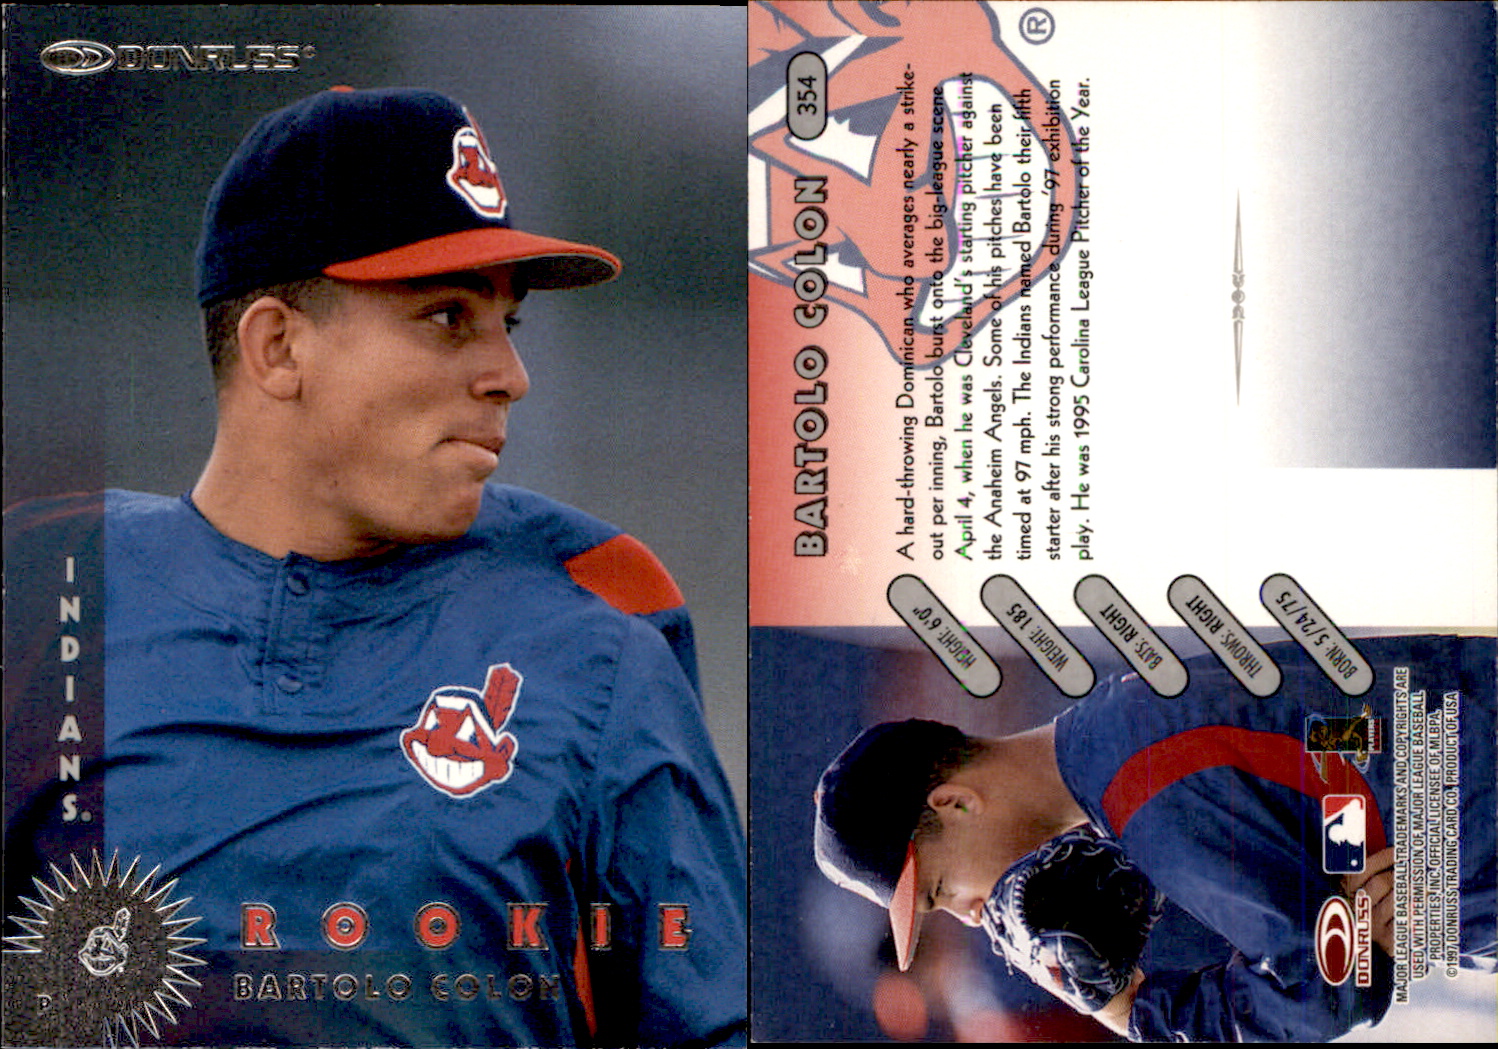 1997 Donruss Baseball Card #354 Bartolo Colon Rookie